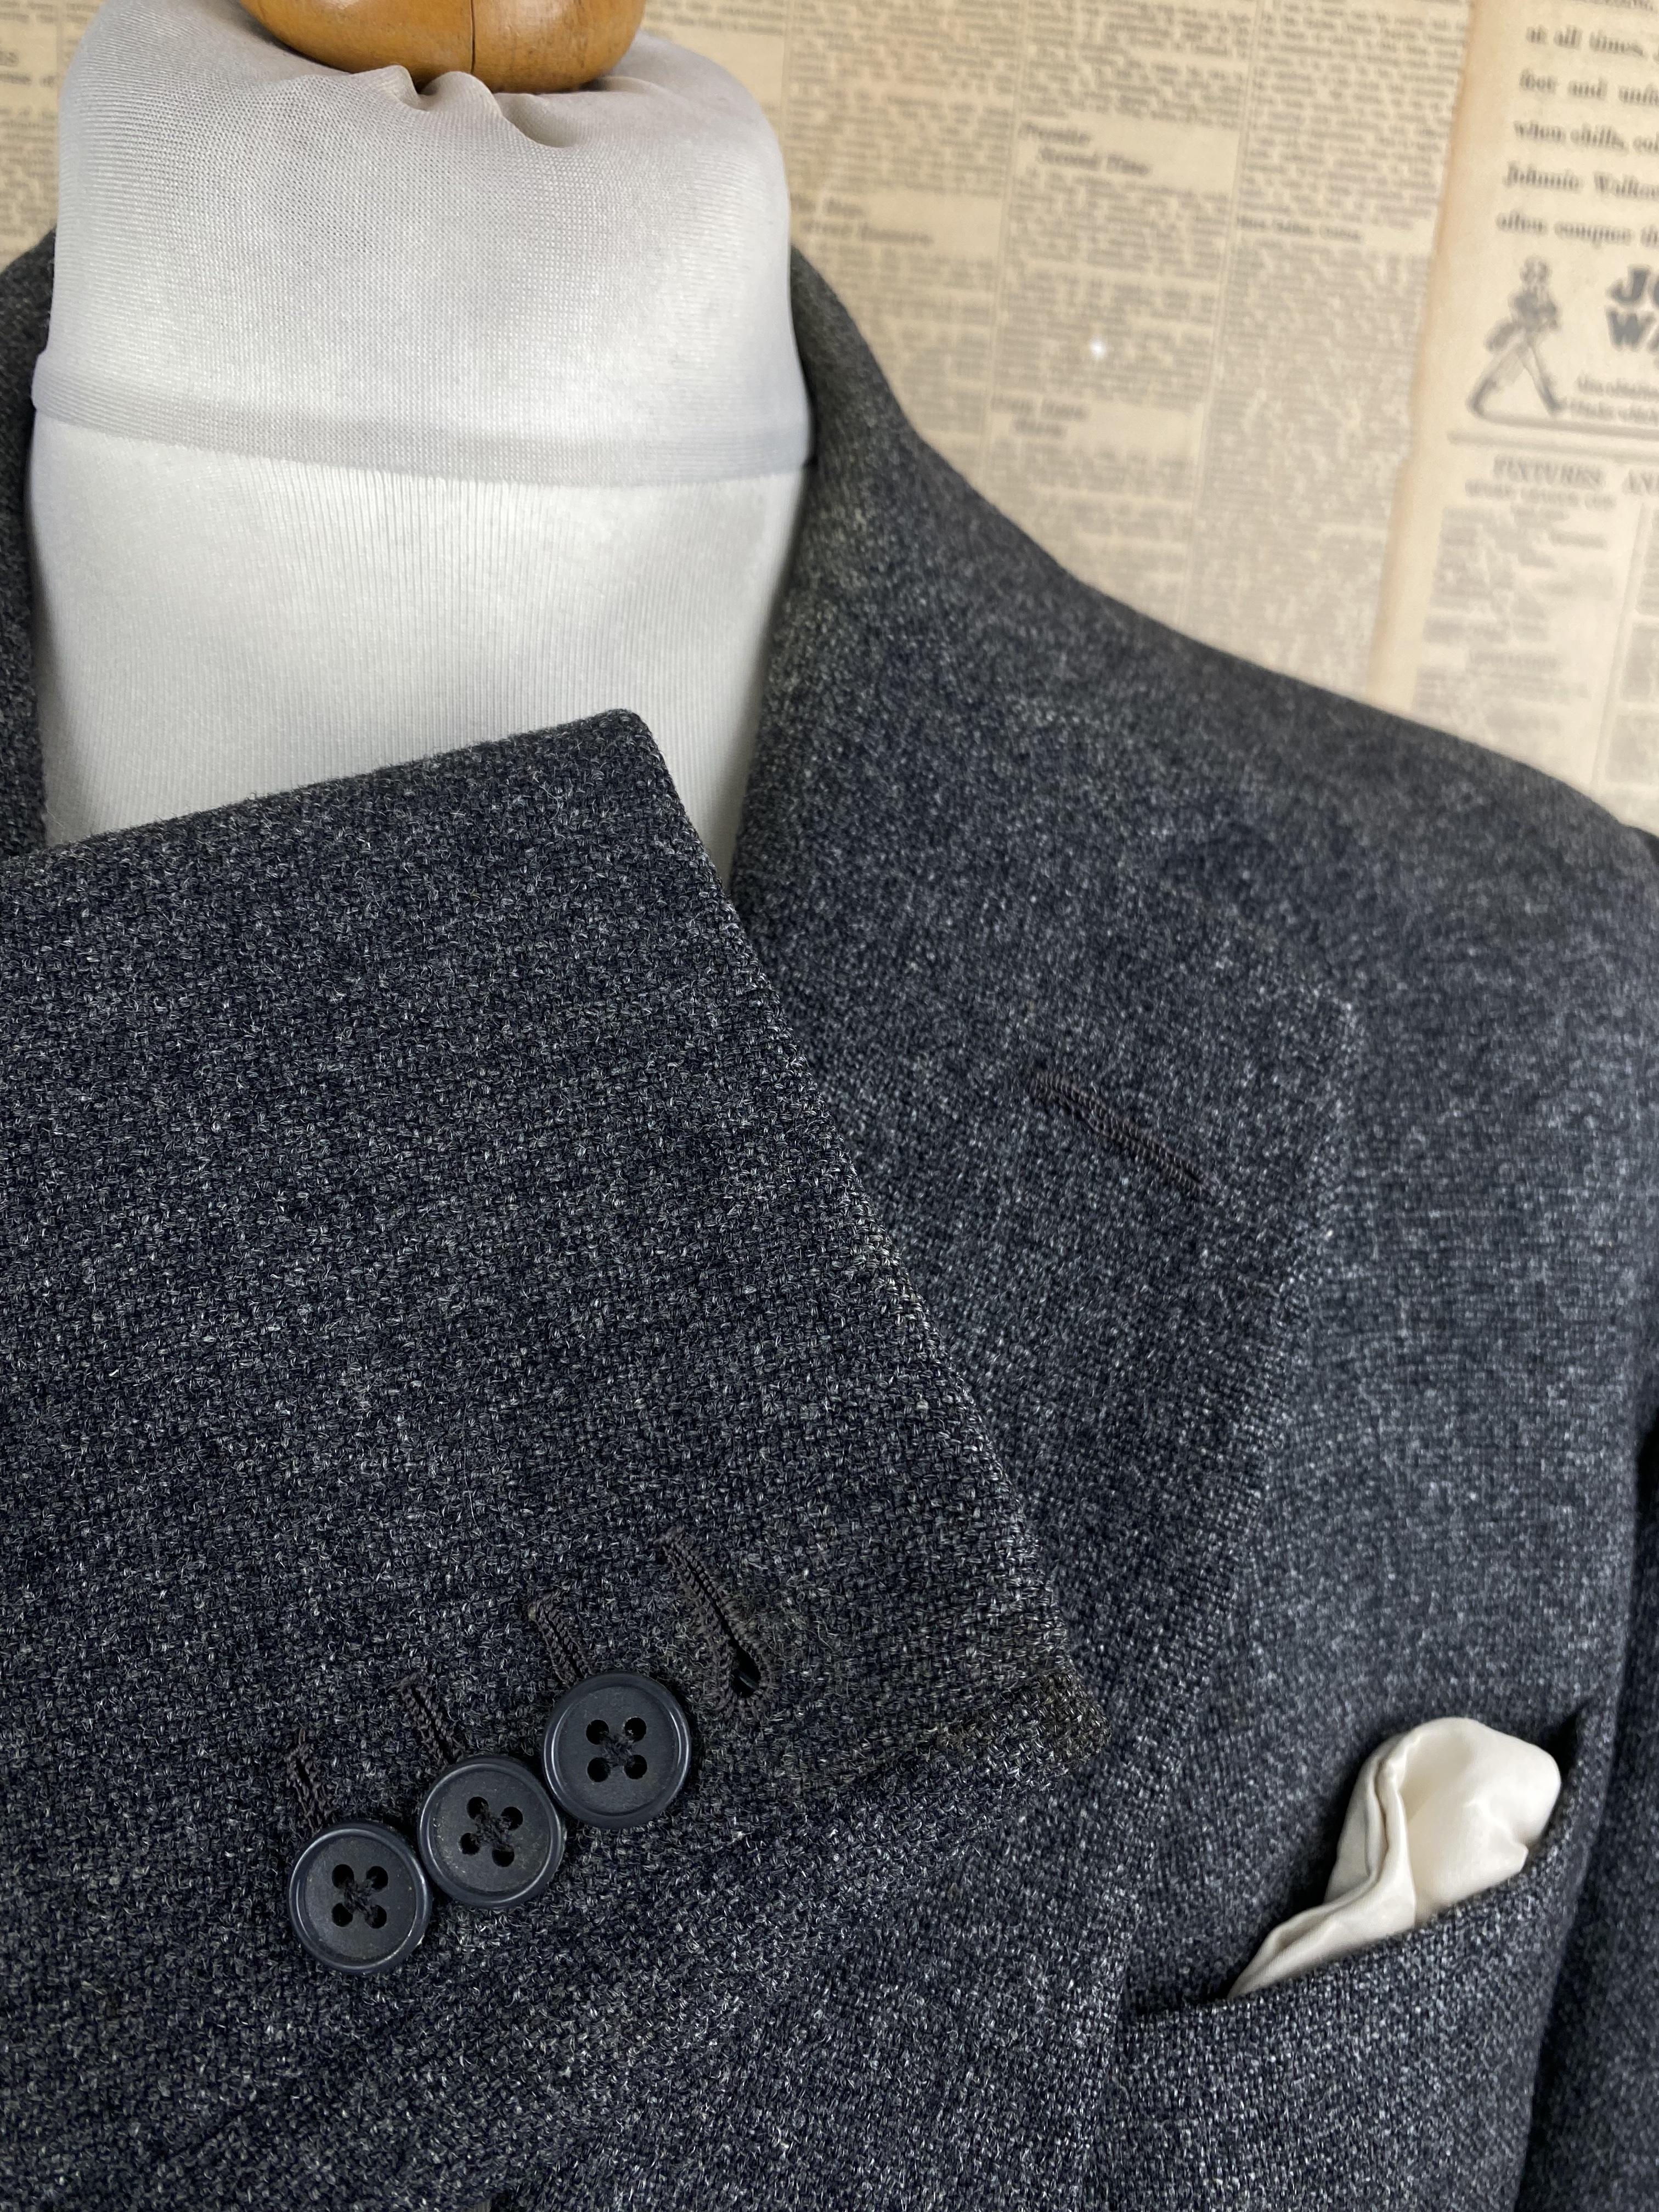 Vintage bespoke 1950's Savile Row grey hopsack suit size 42 44